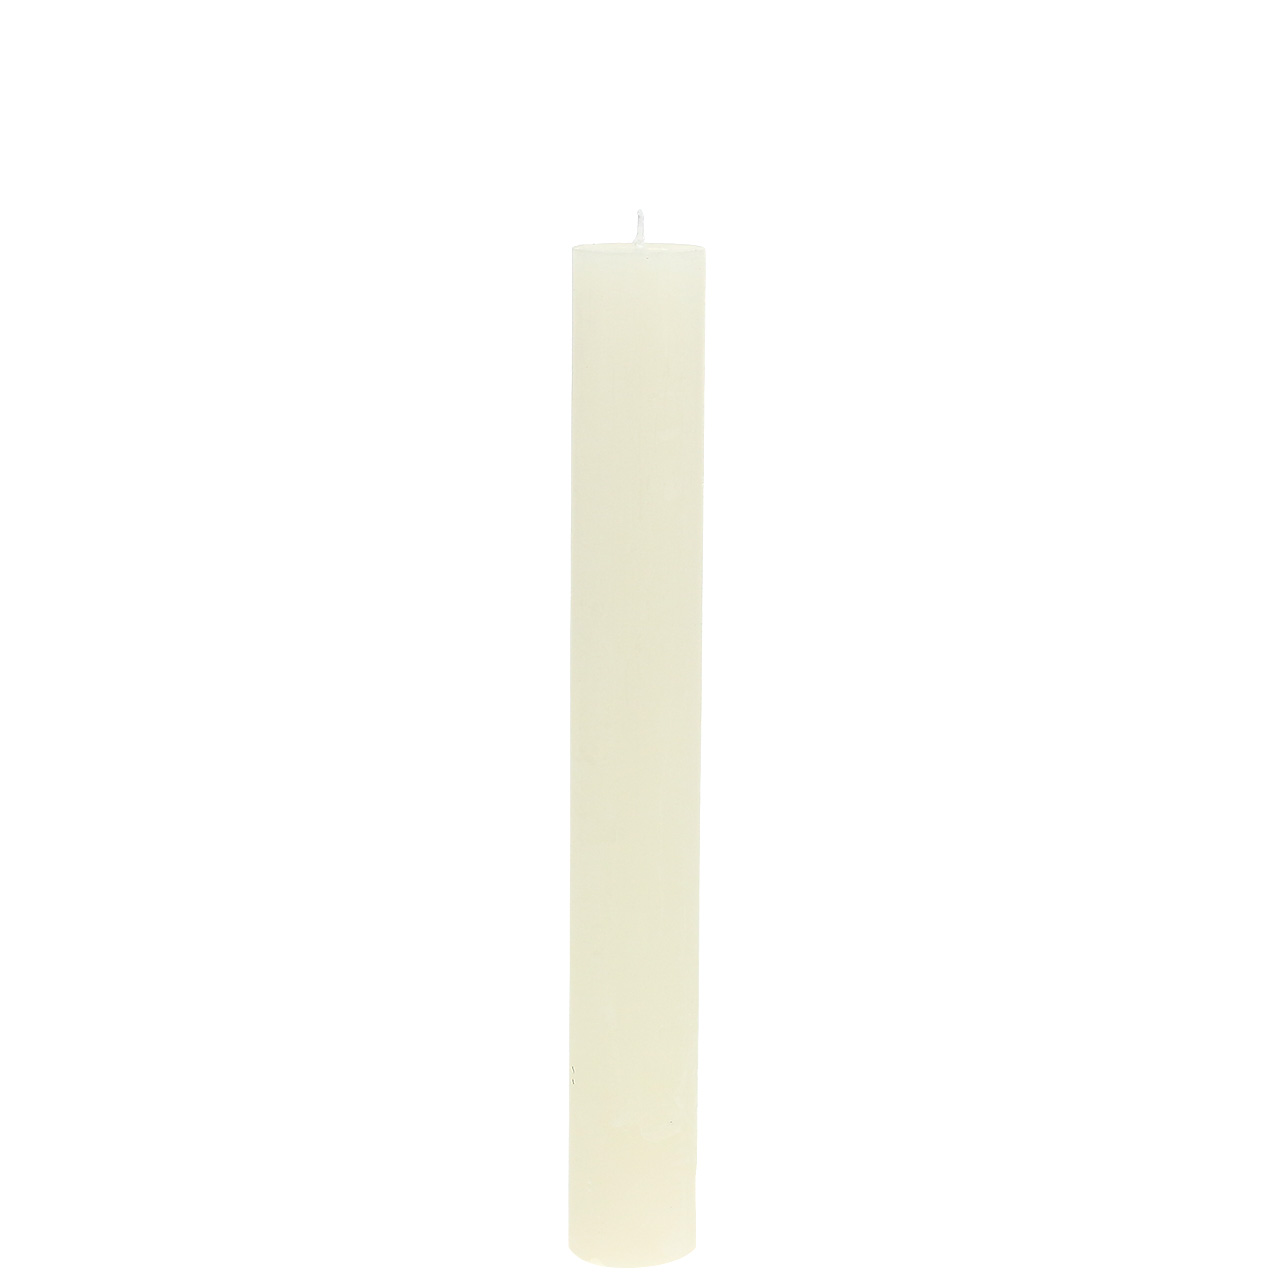 Candele in stick candele nere tinte 34×240mm 4pz-13050-009